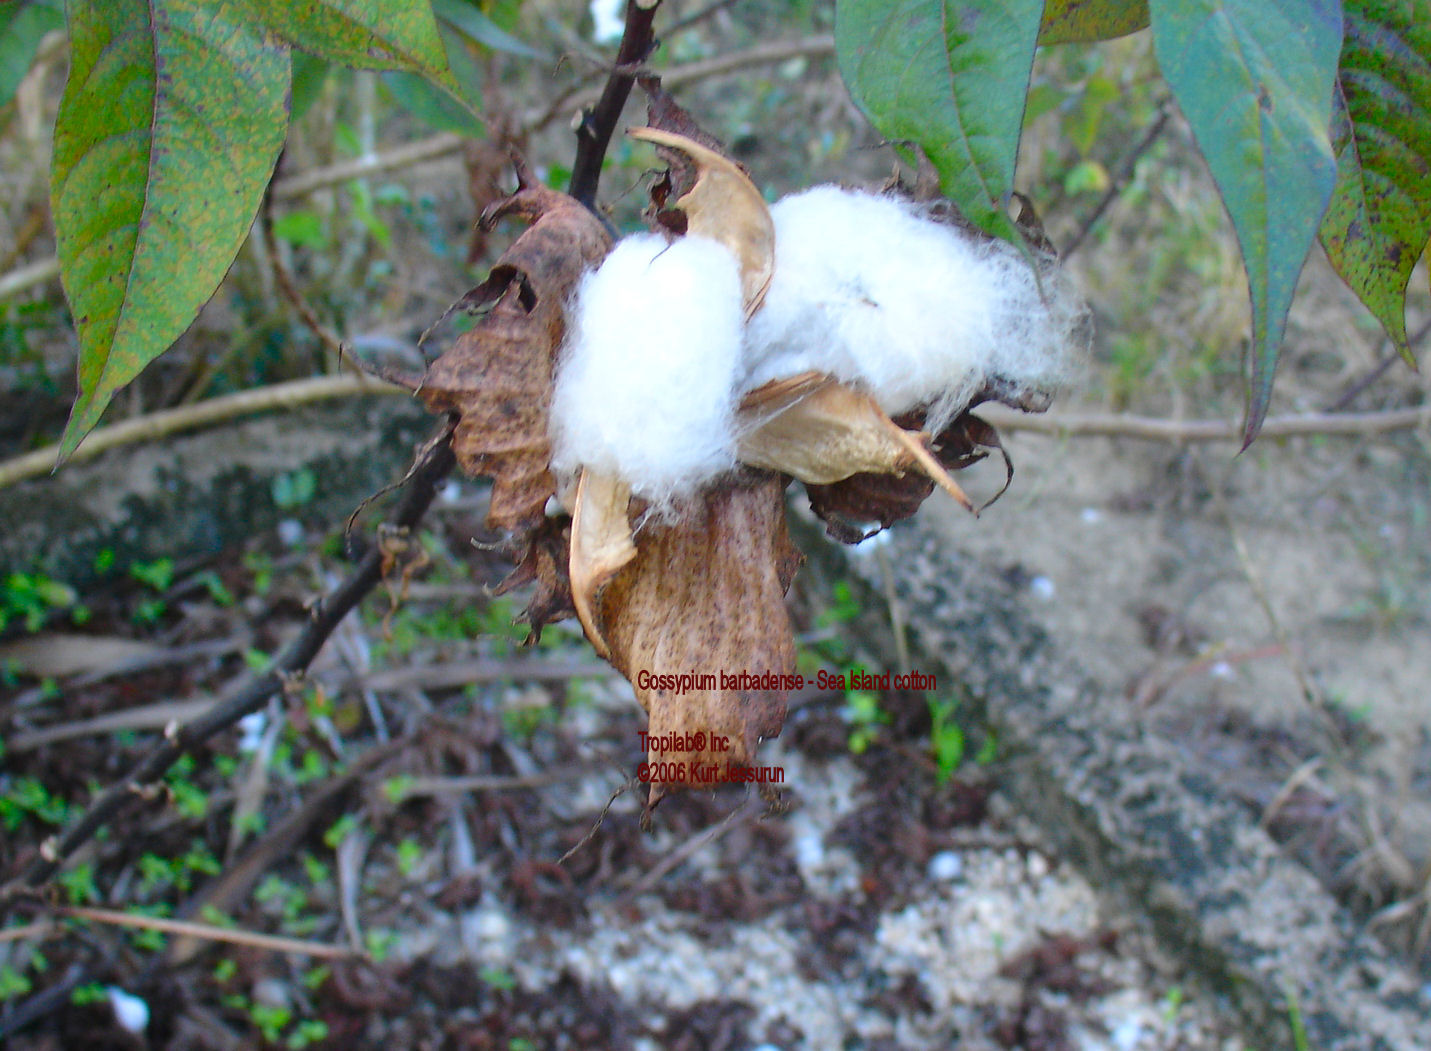 Gossypium barbadense - Sea Island cotton seeds